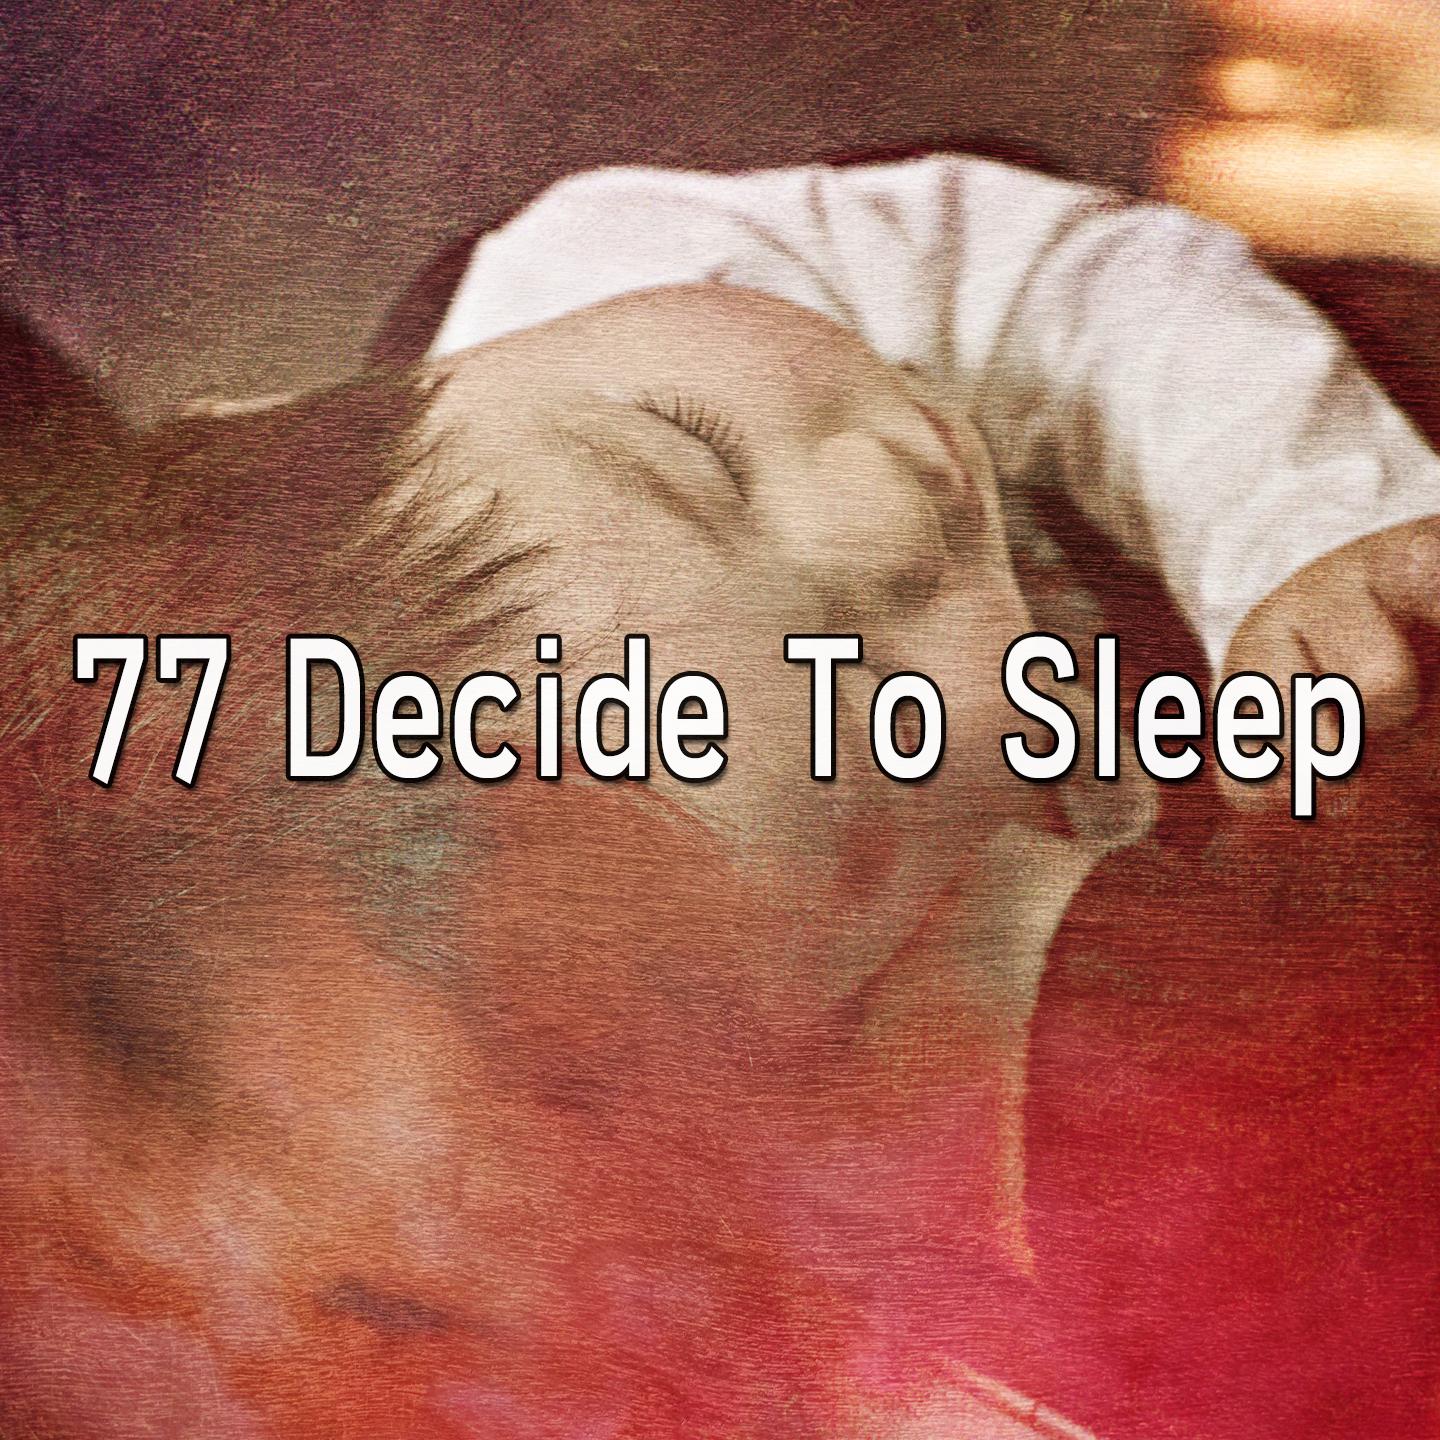 77 Decide To Sleep